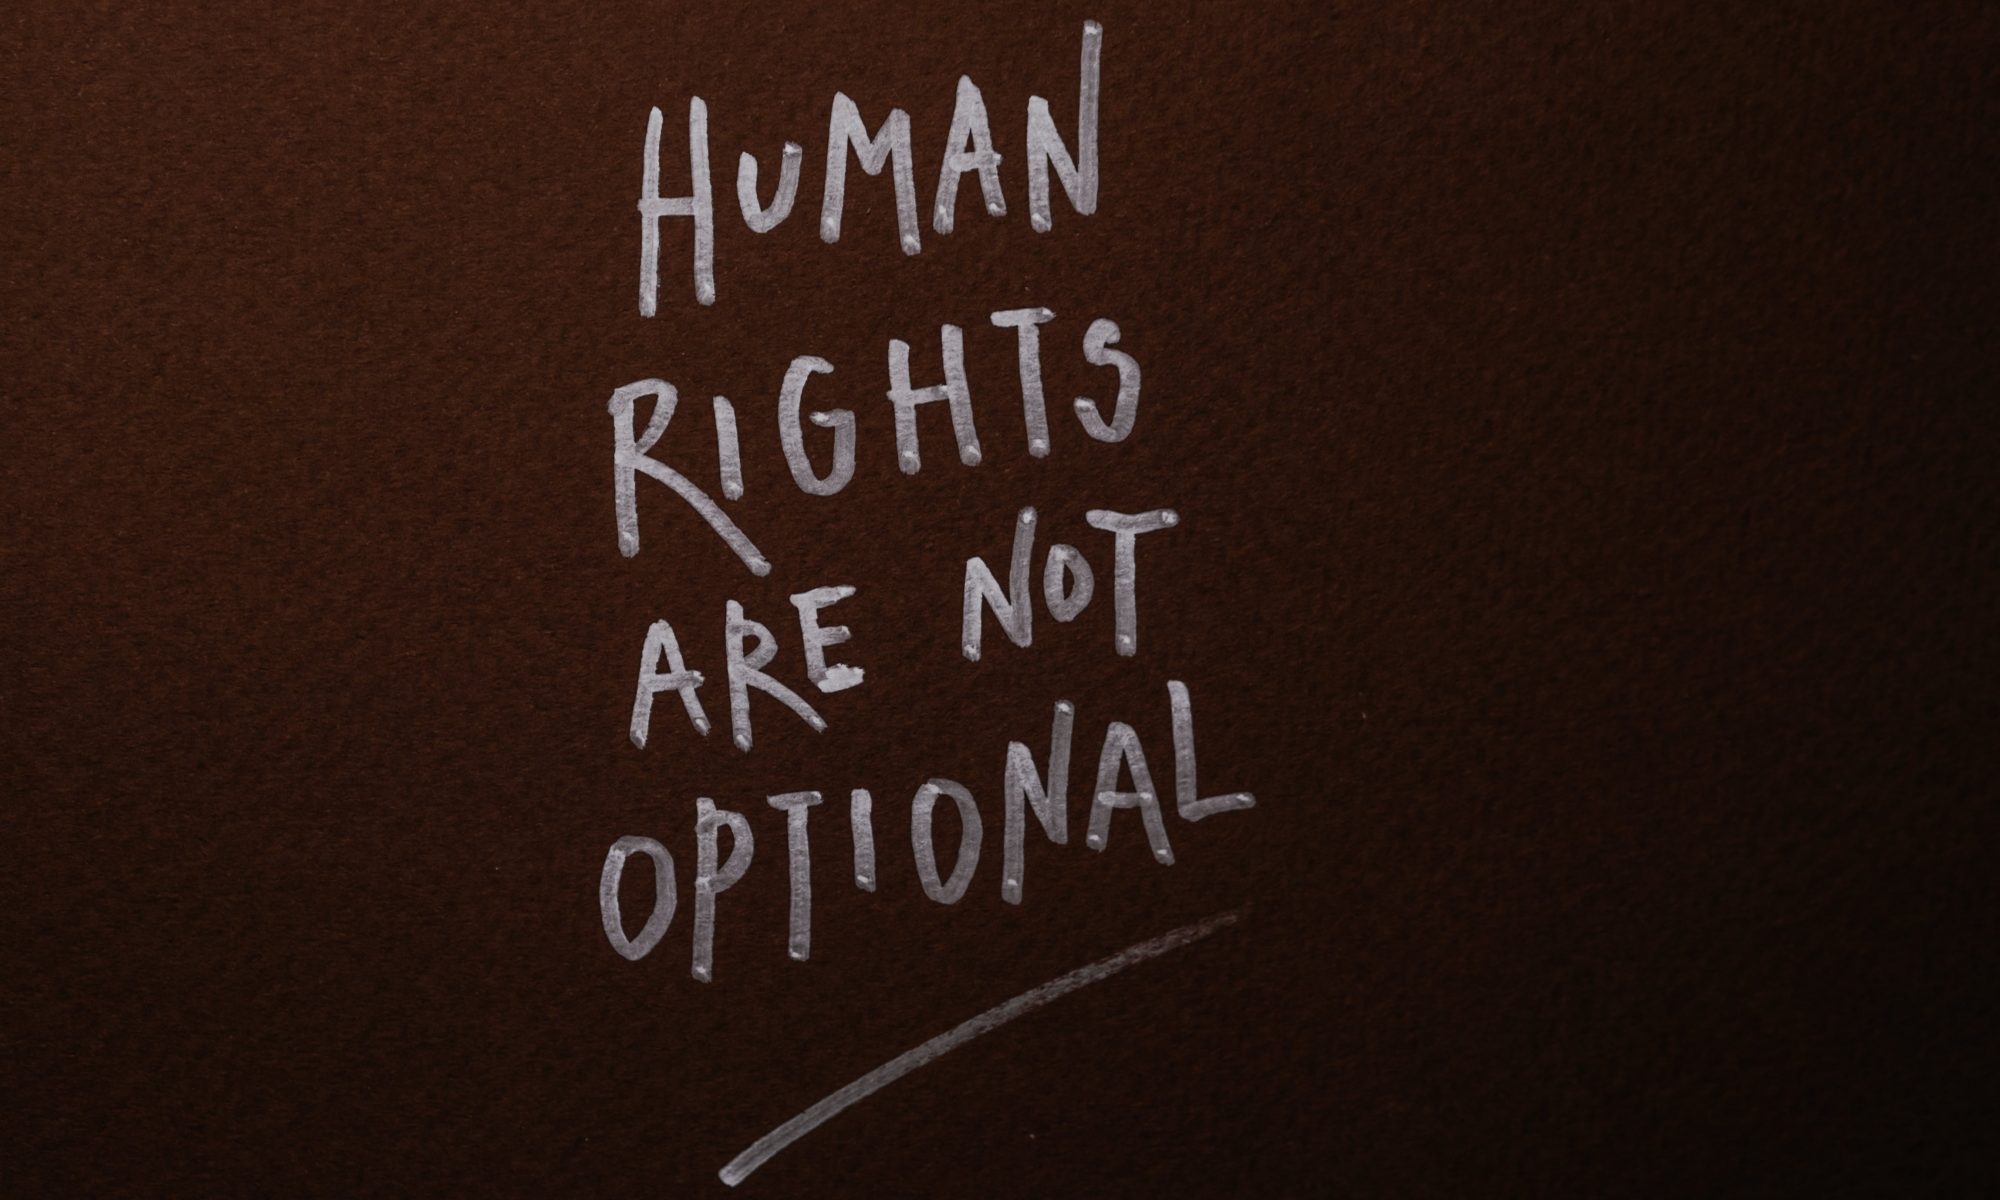 Schrift: Human rights are not optional - deutsch: Menschenrechte sind nicht optional